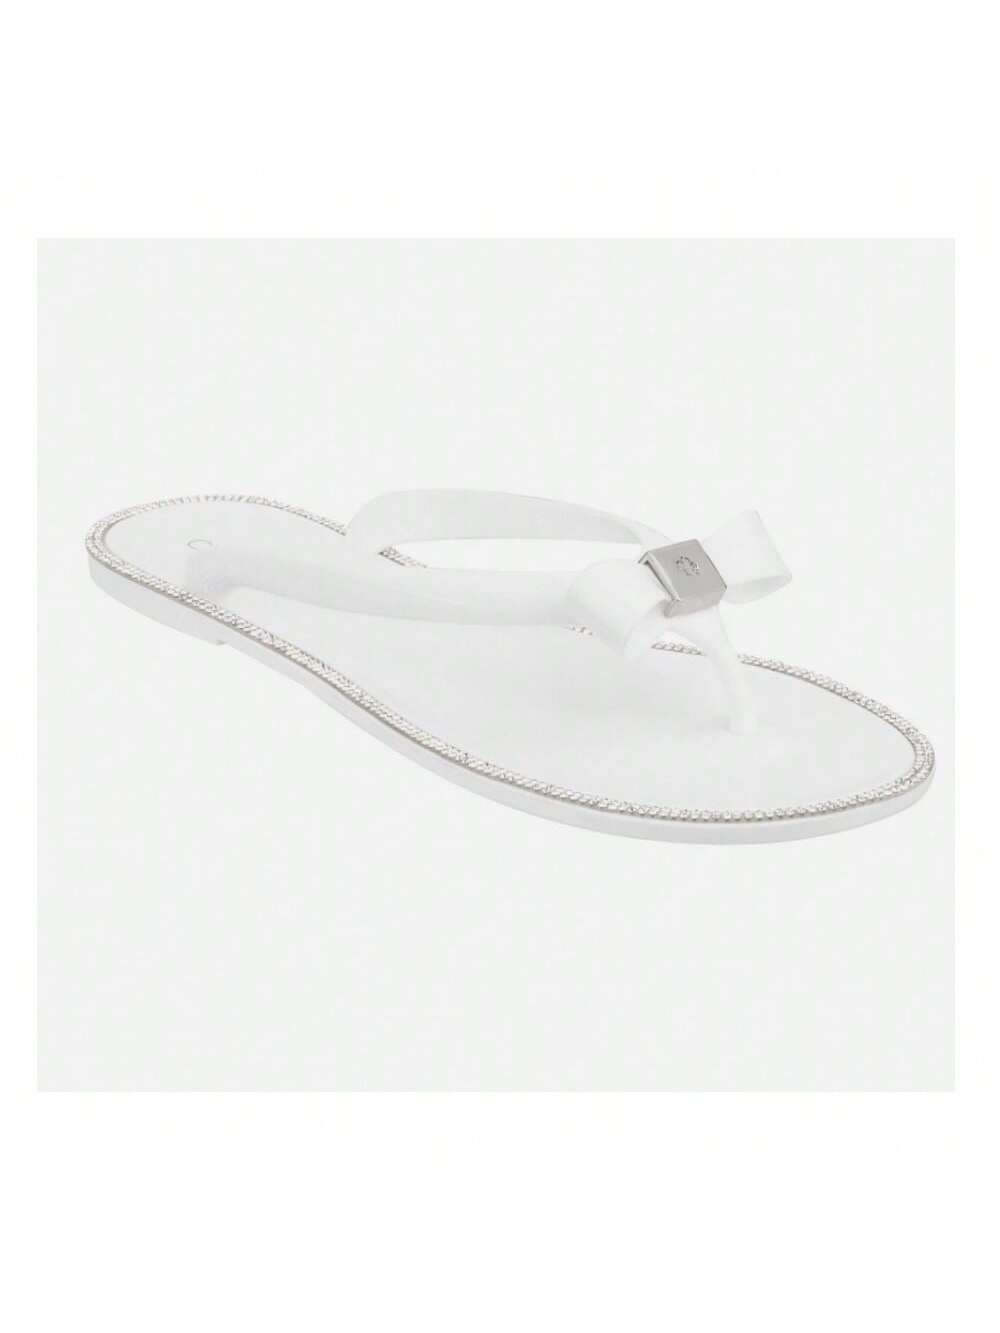 Women's Jelly Sandals Rhinestone Flip Flops Slide Flat Sandals-White-1